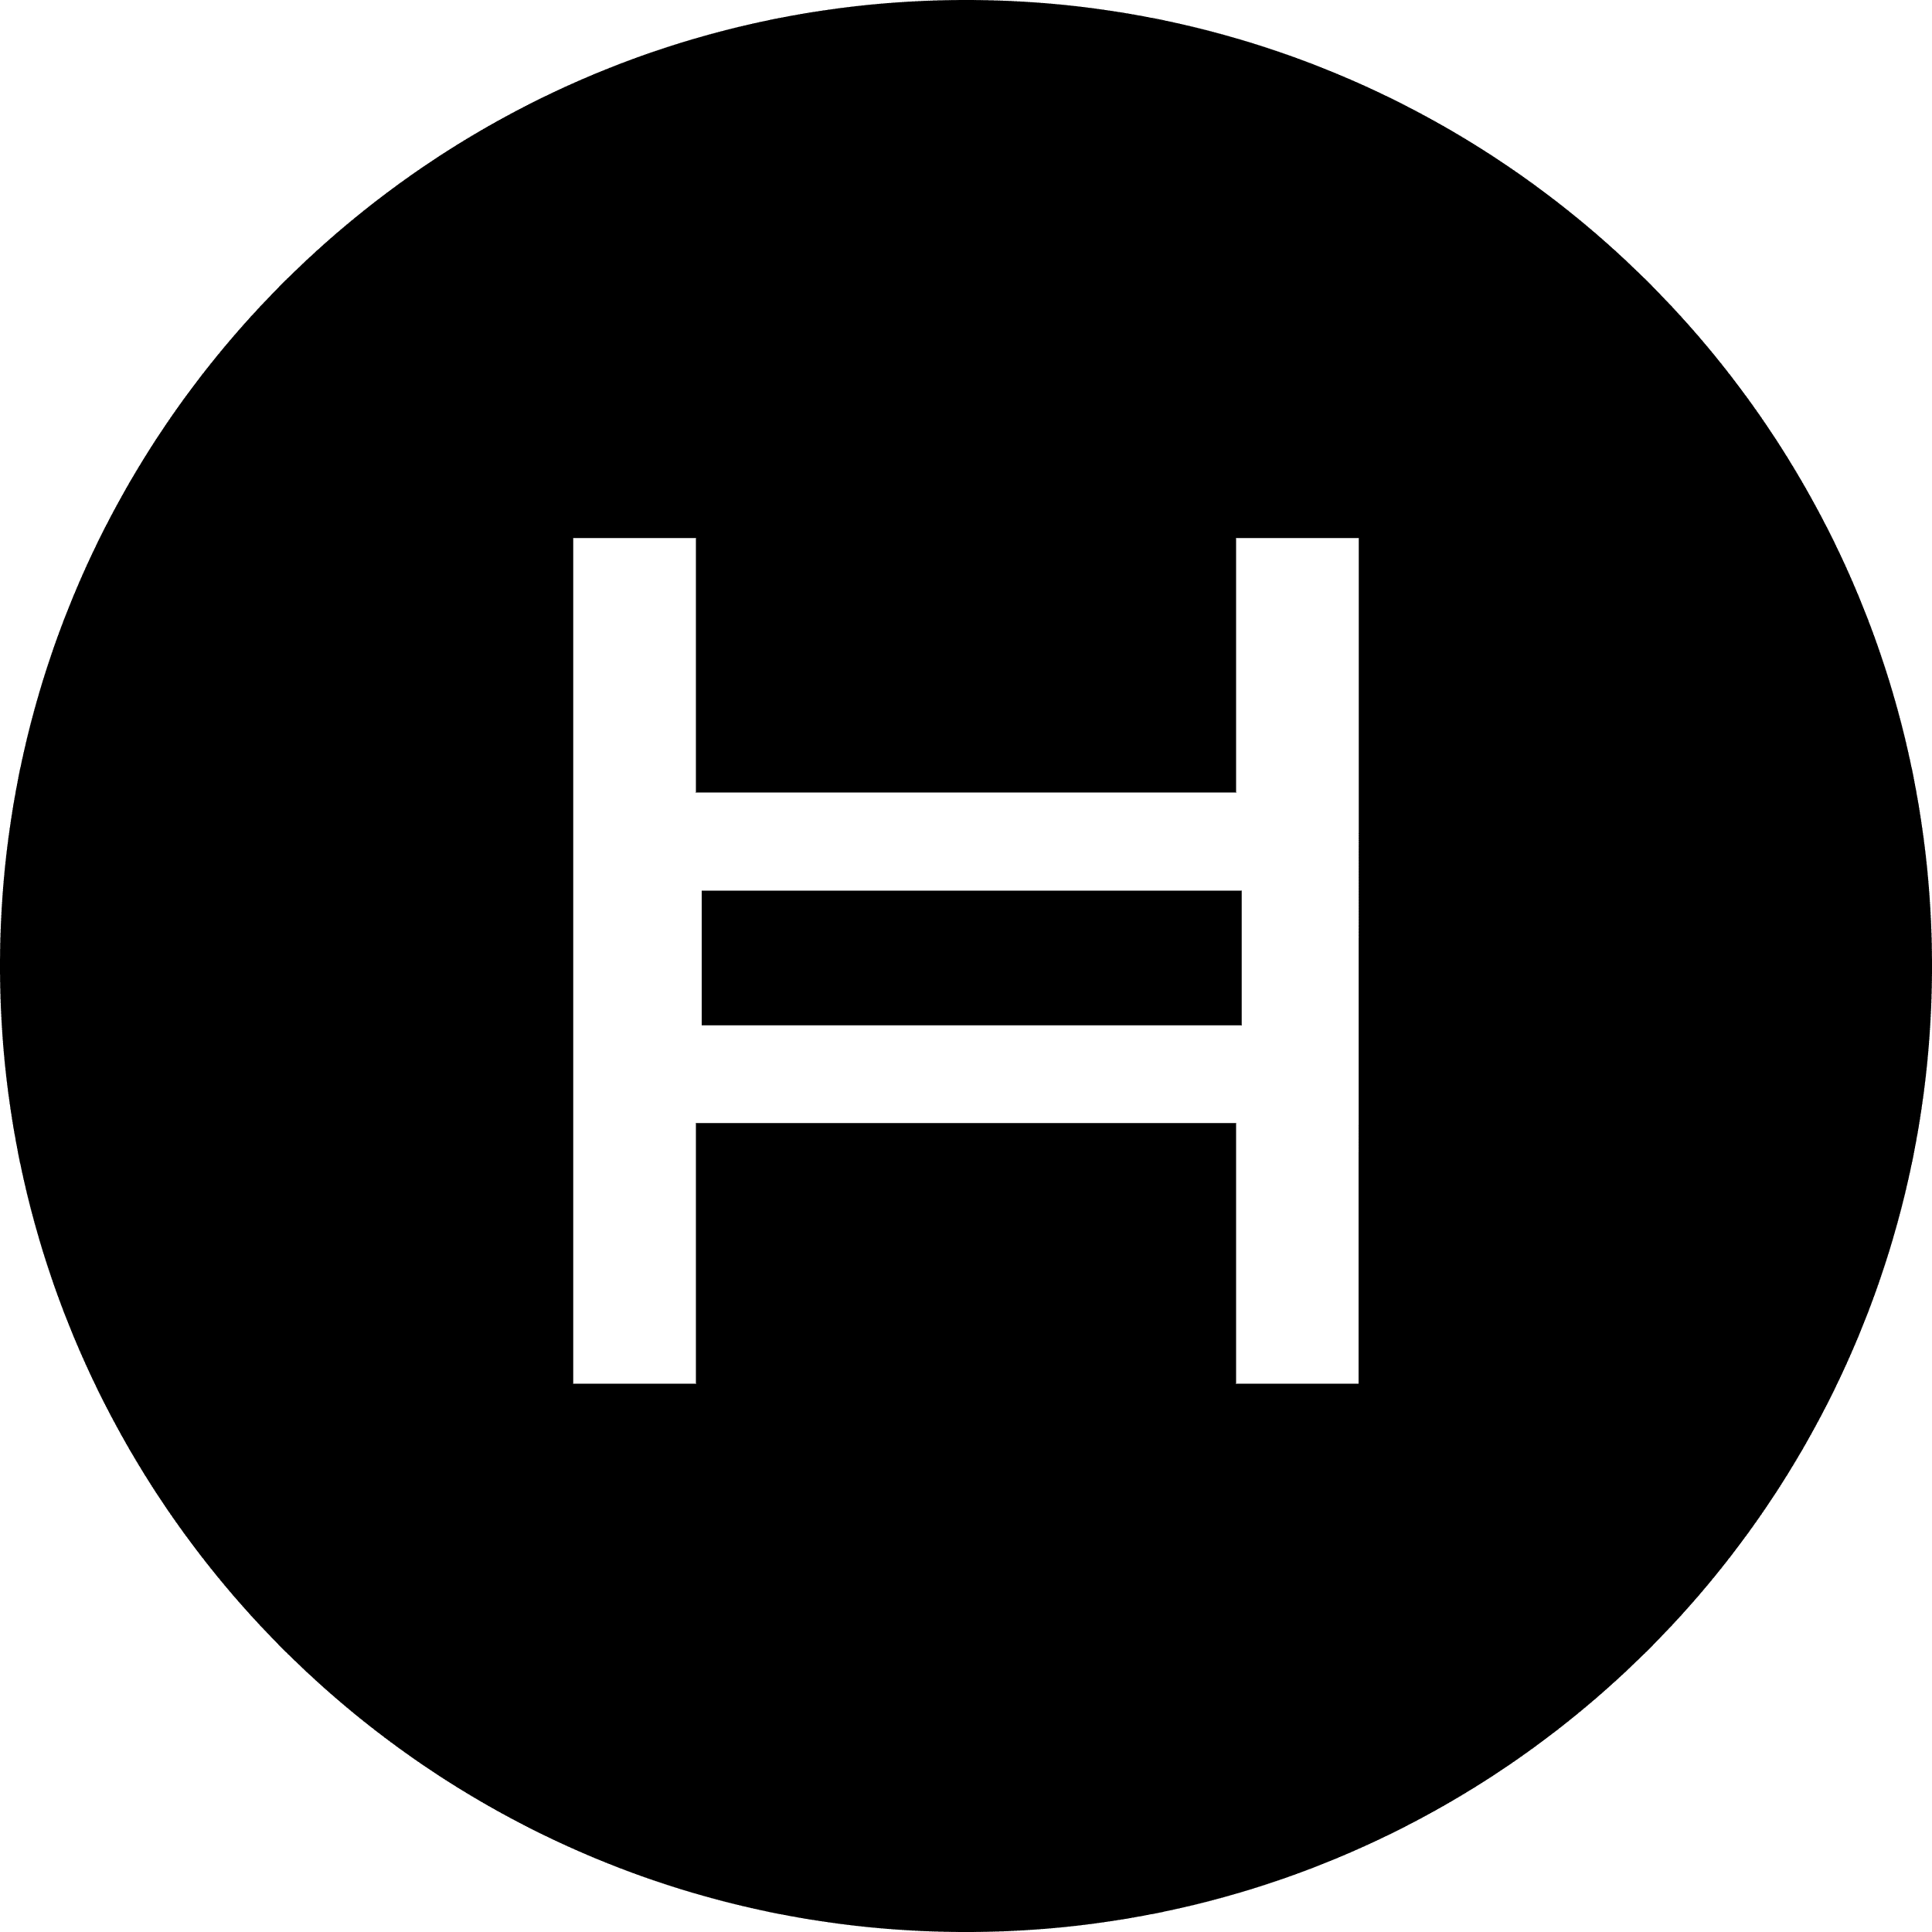 Hedera logo in svg format